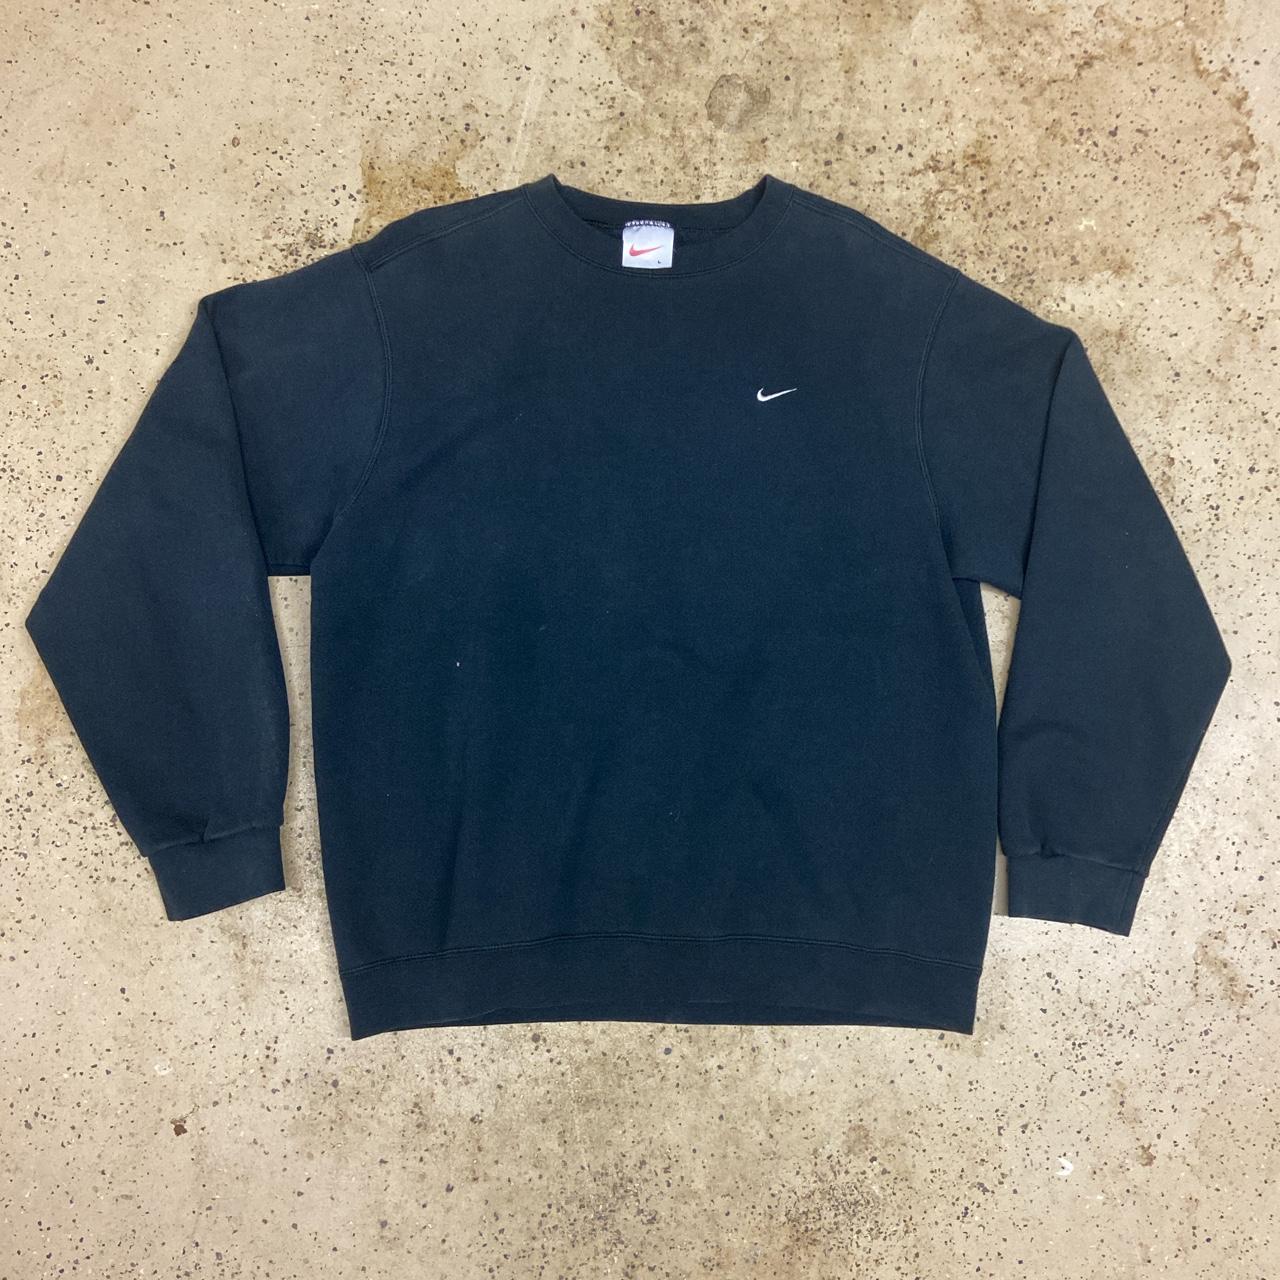 Nike Men's Black Sweatshirt